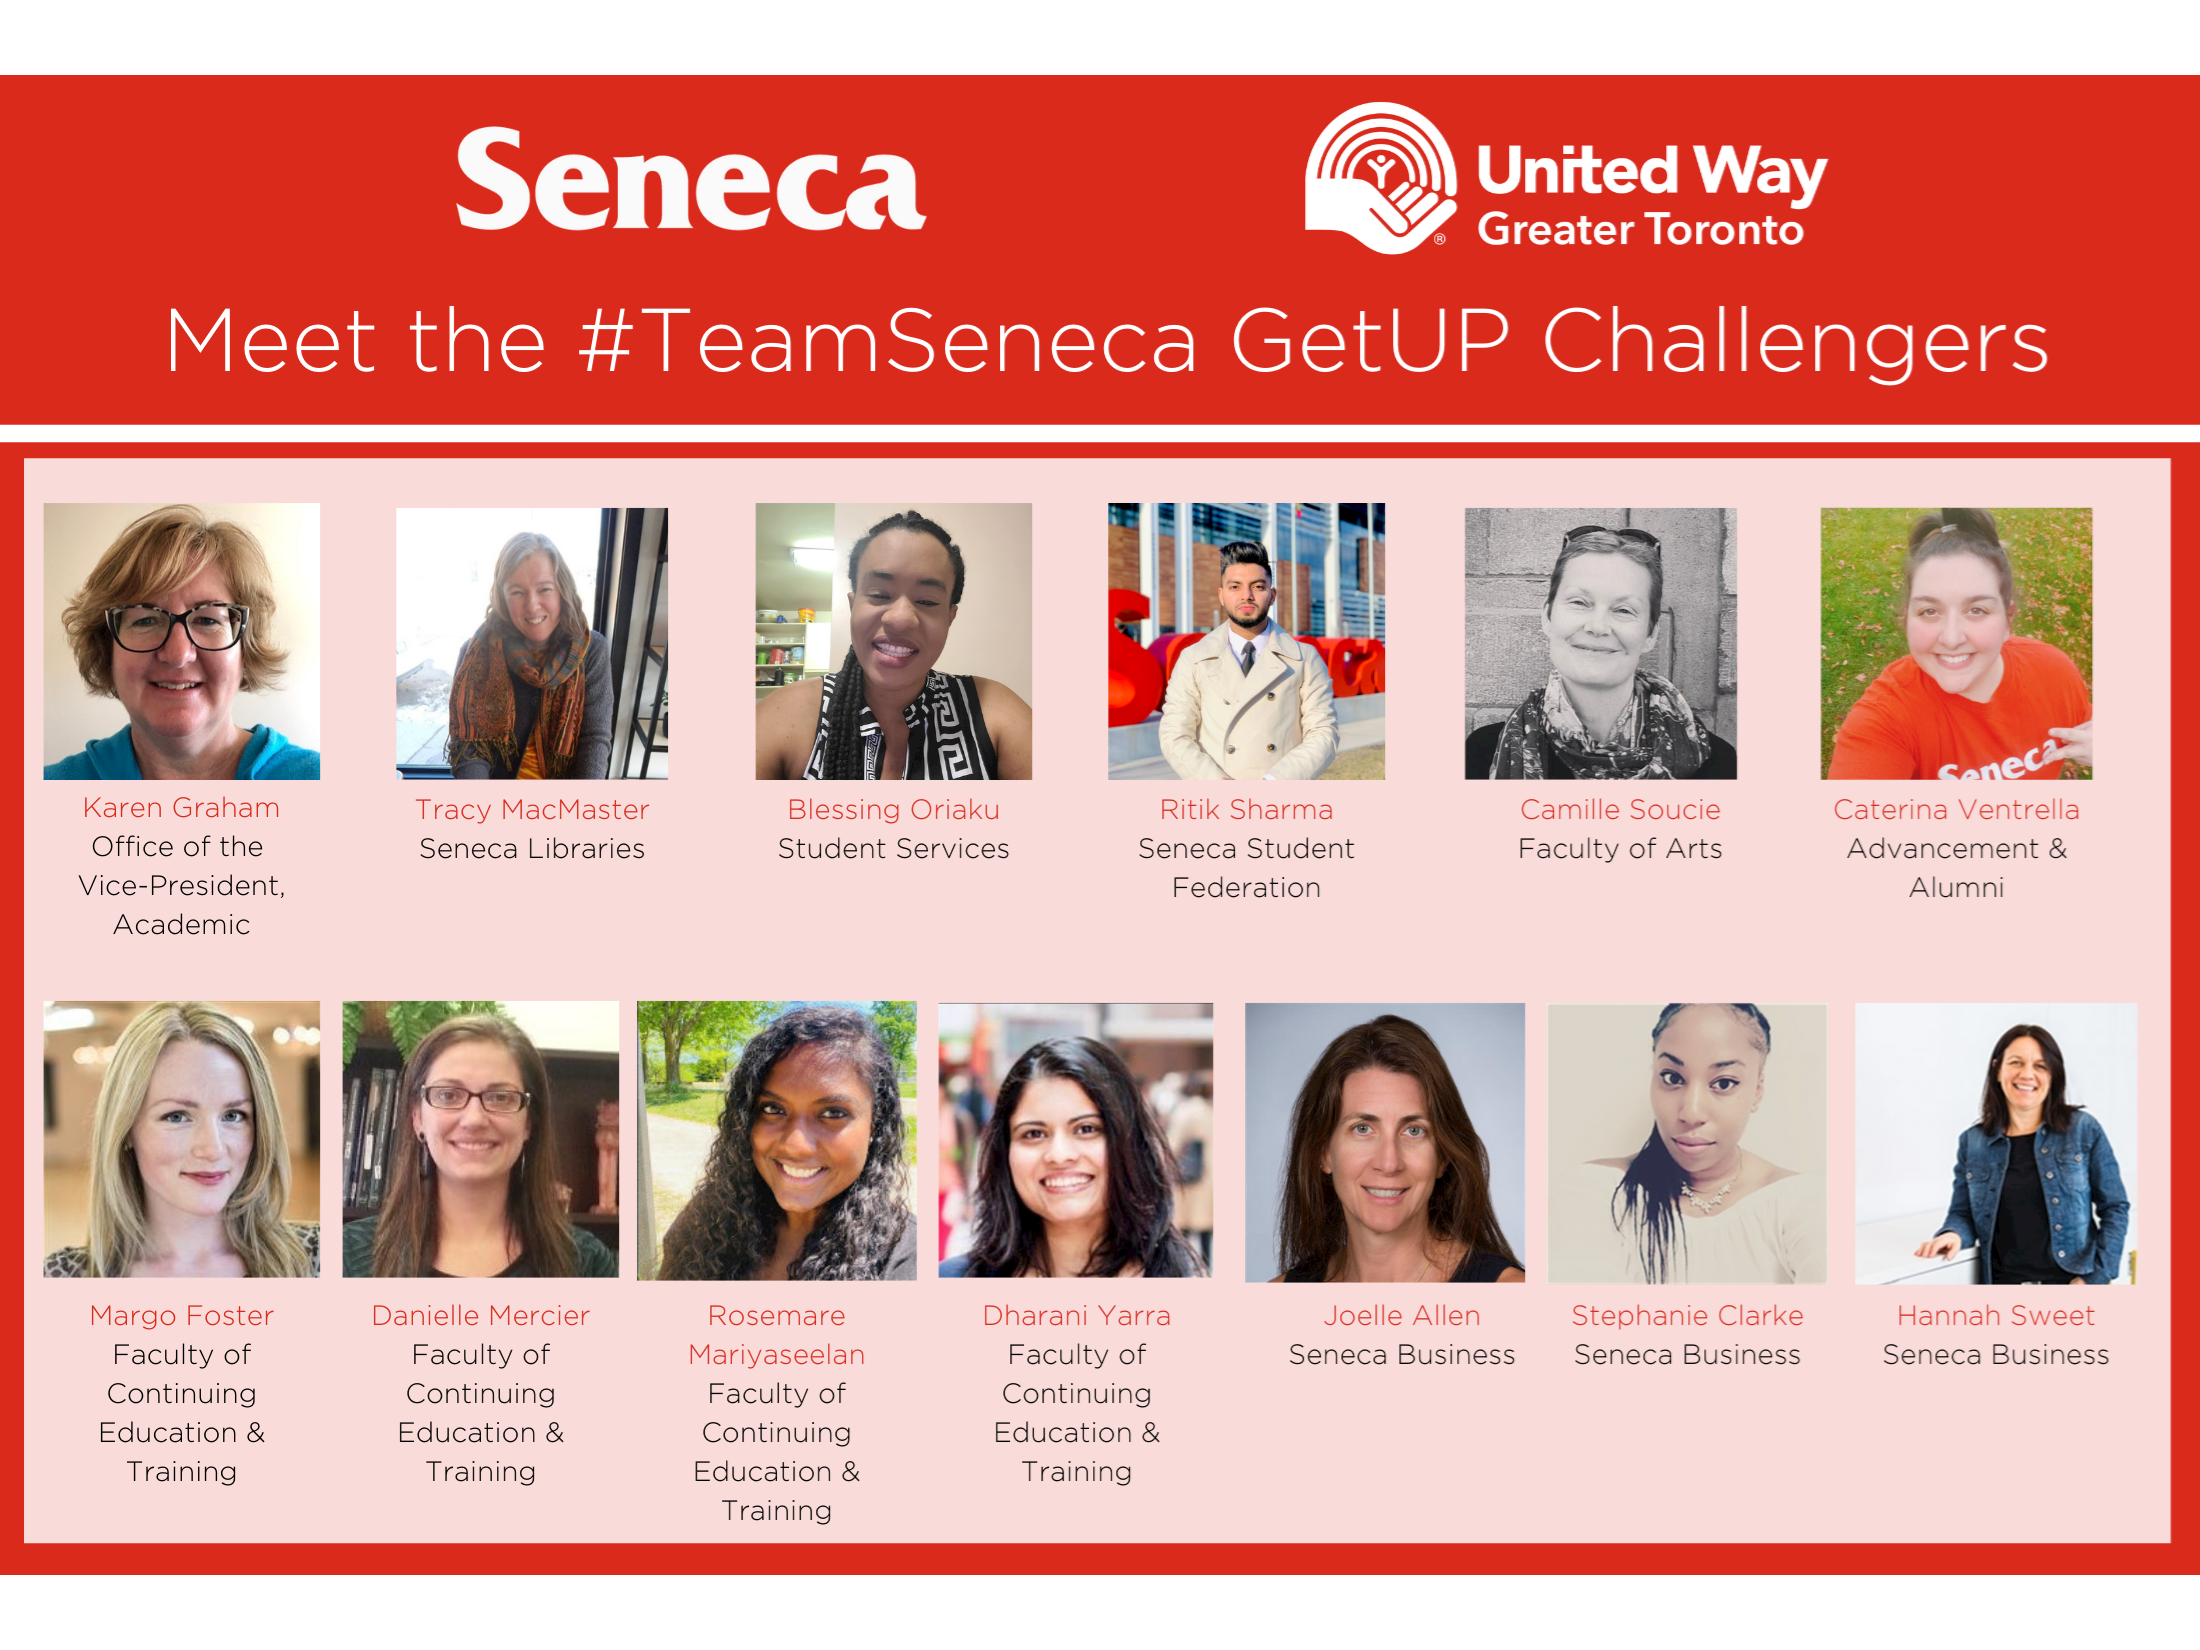 Meet the Team Seneca GetUP Challengers